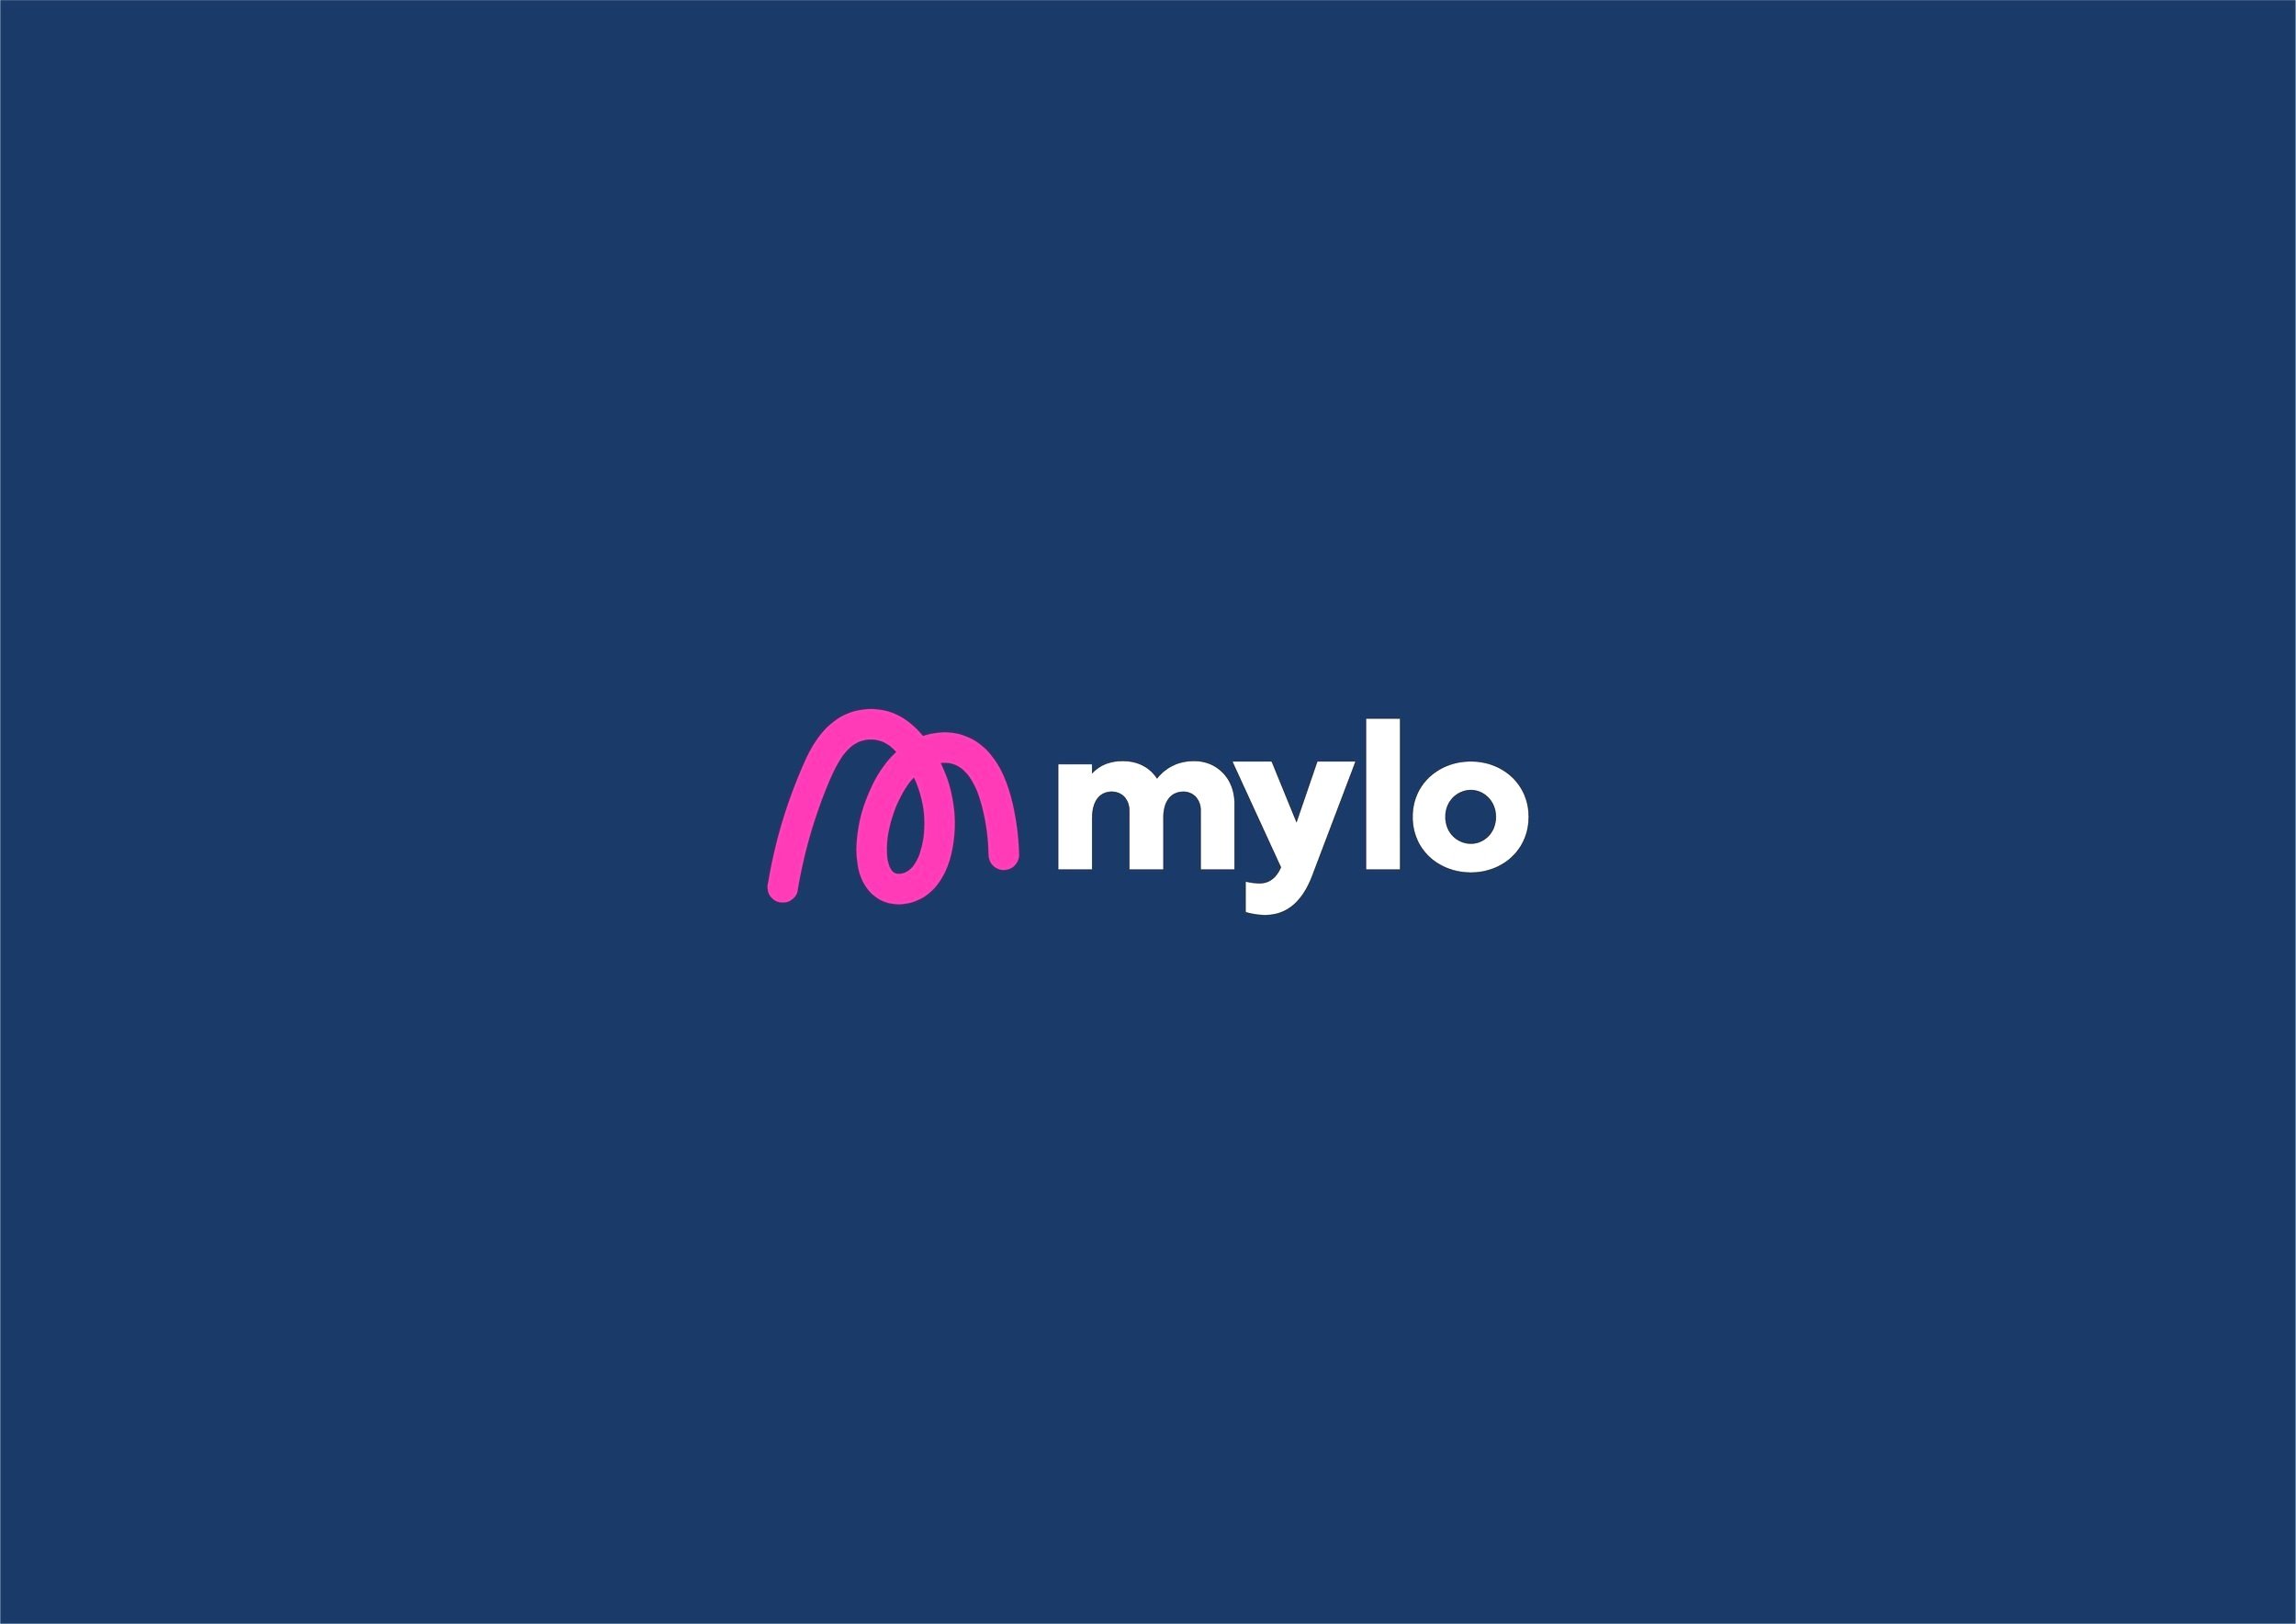 Freelance-graphic-designer-Dark blue and Pink Mylo logo design - Mylo is a same day courier startup based in London 